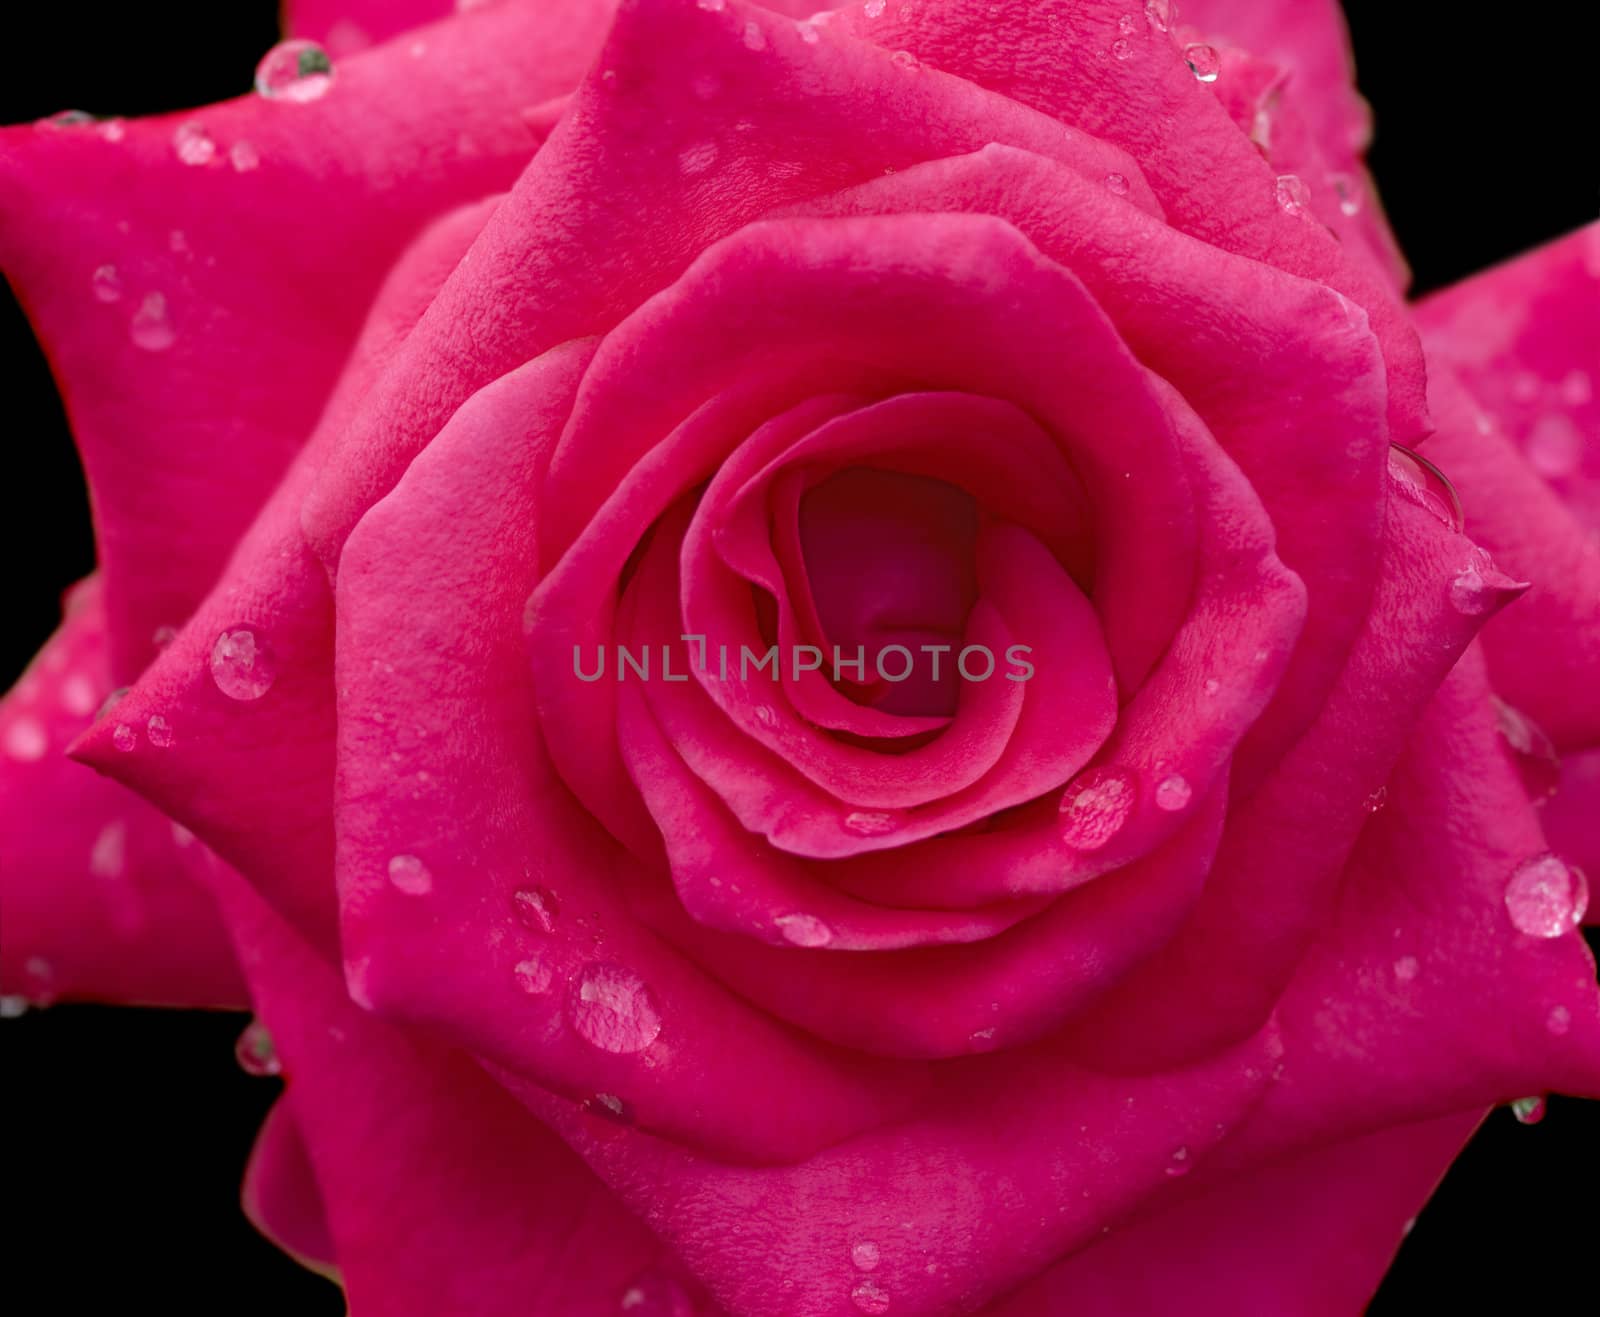 raindrops on red rose flower on black by sherj